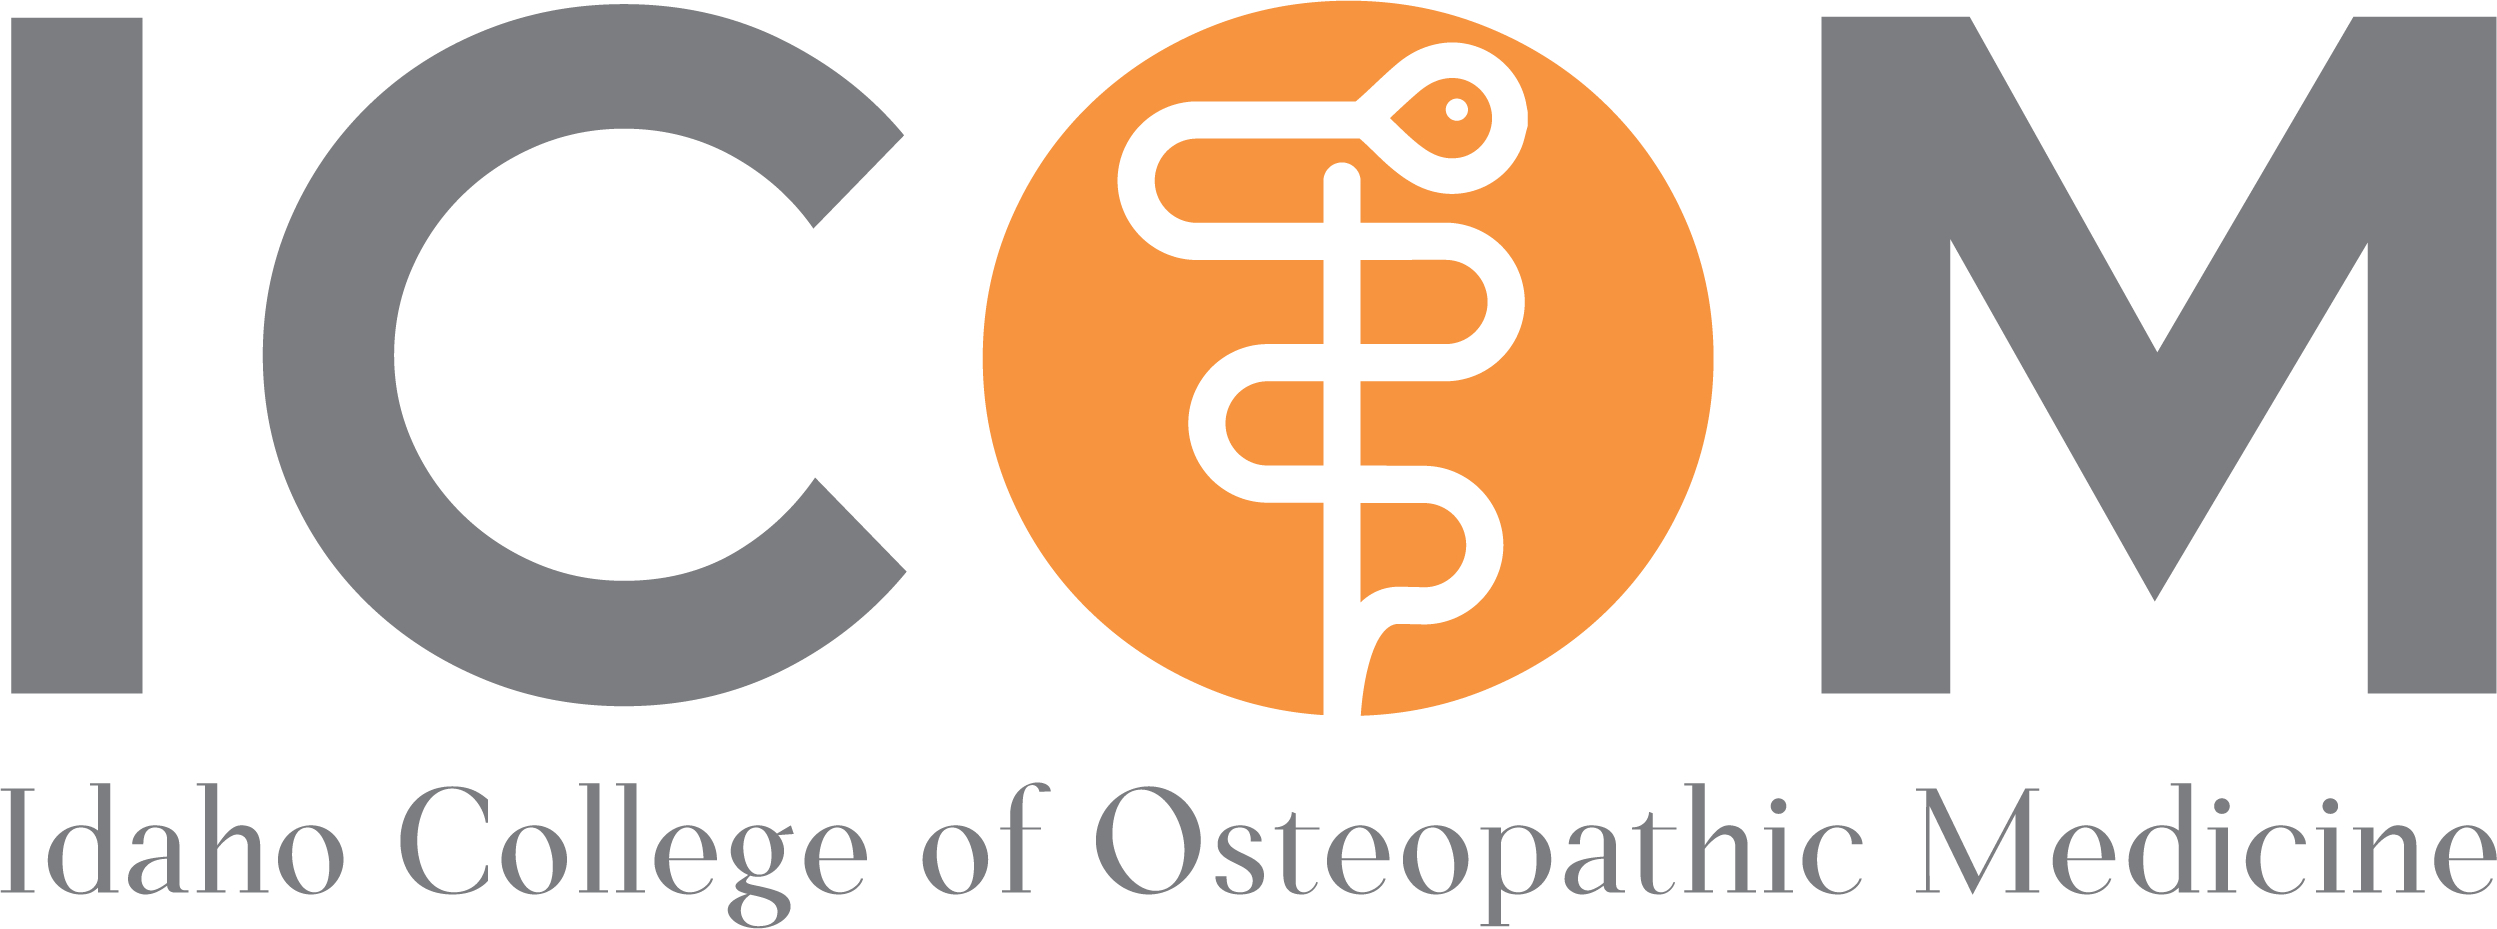 Idaho College of Osteopathic Medicine